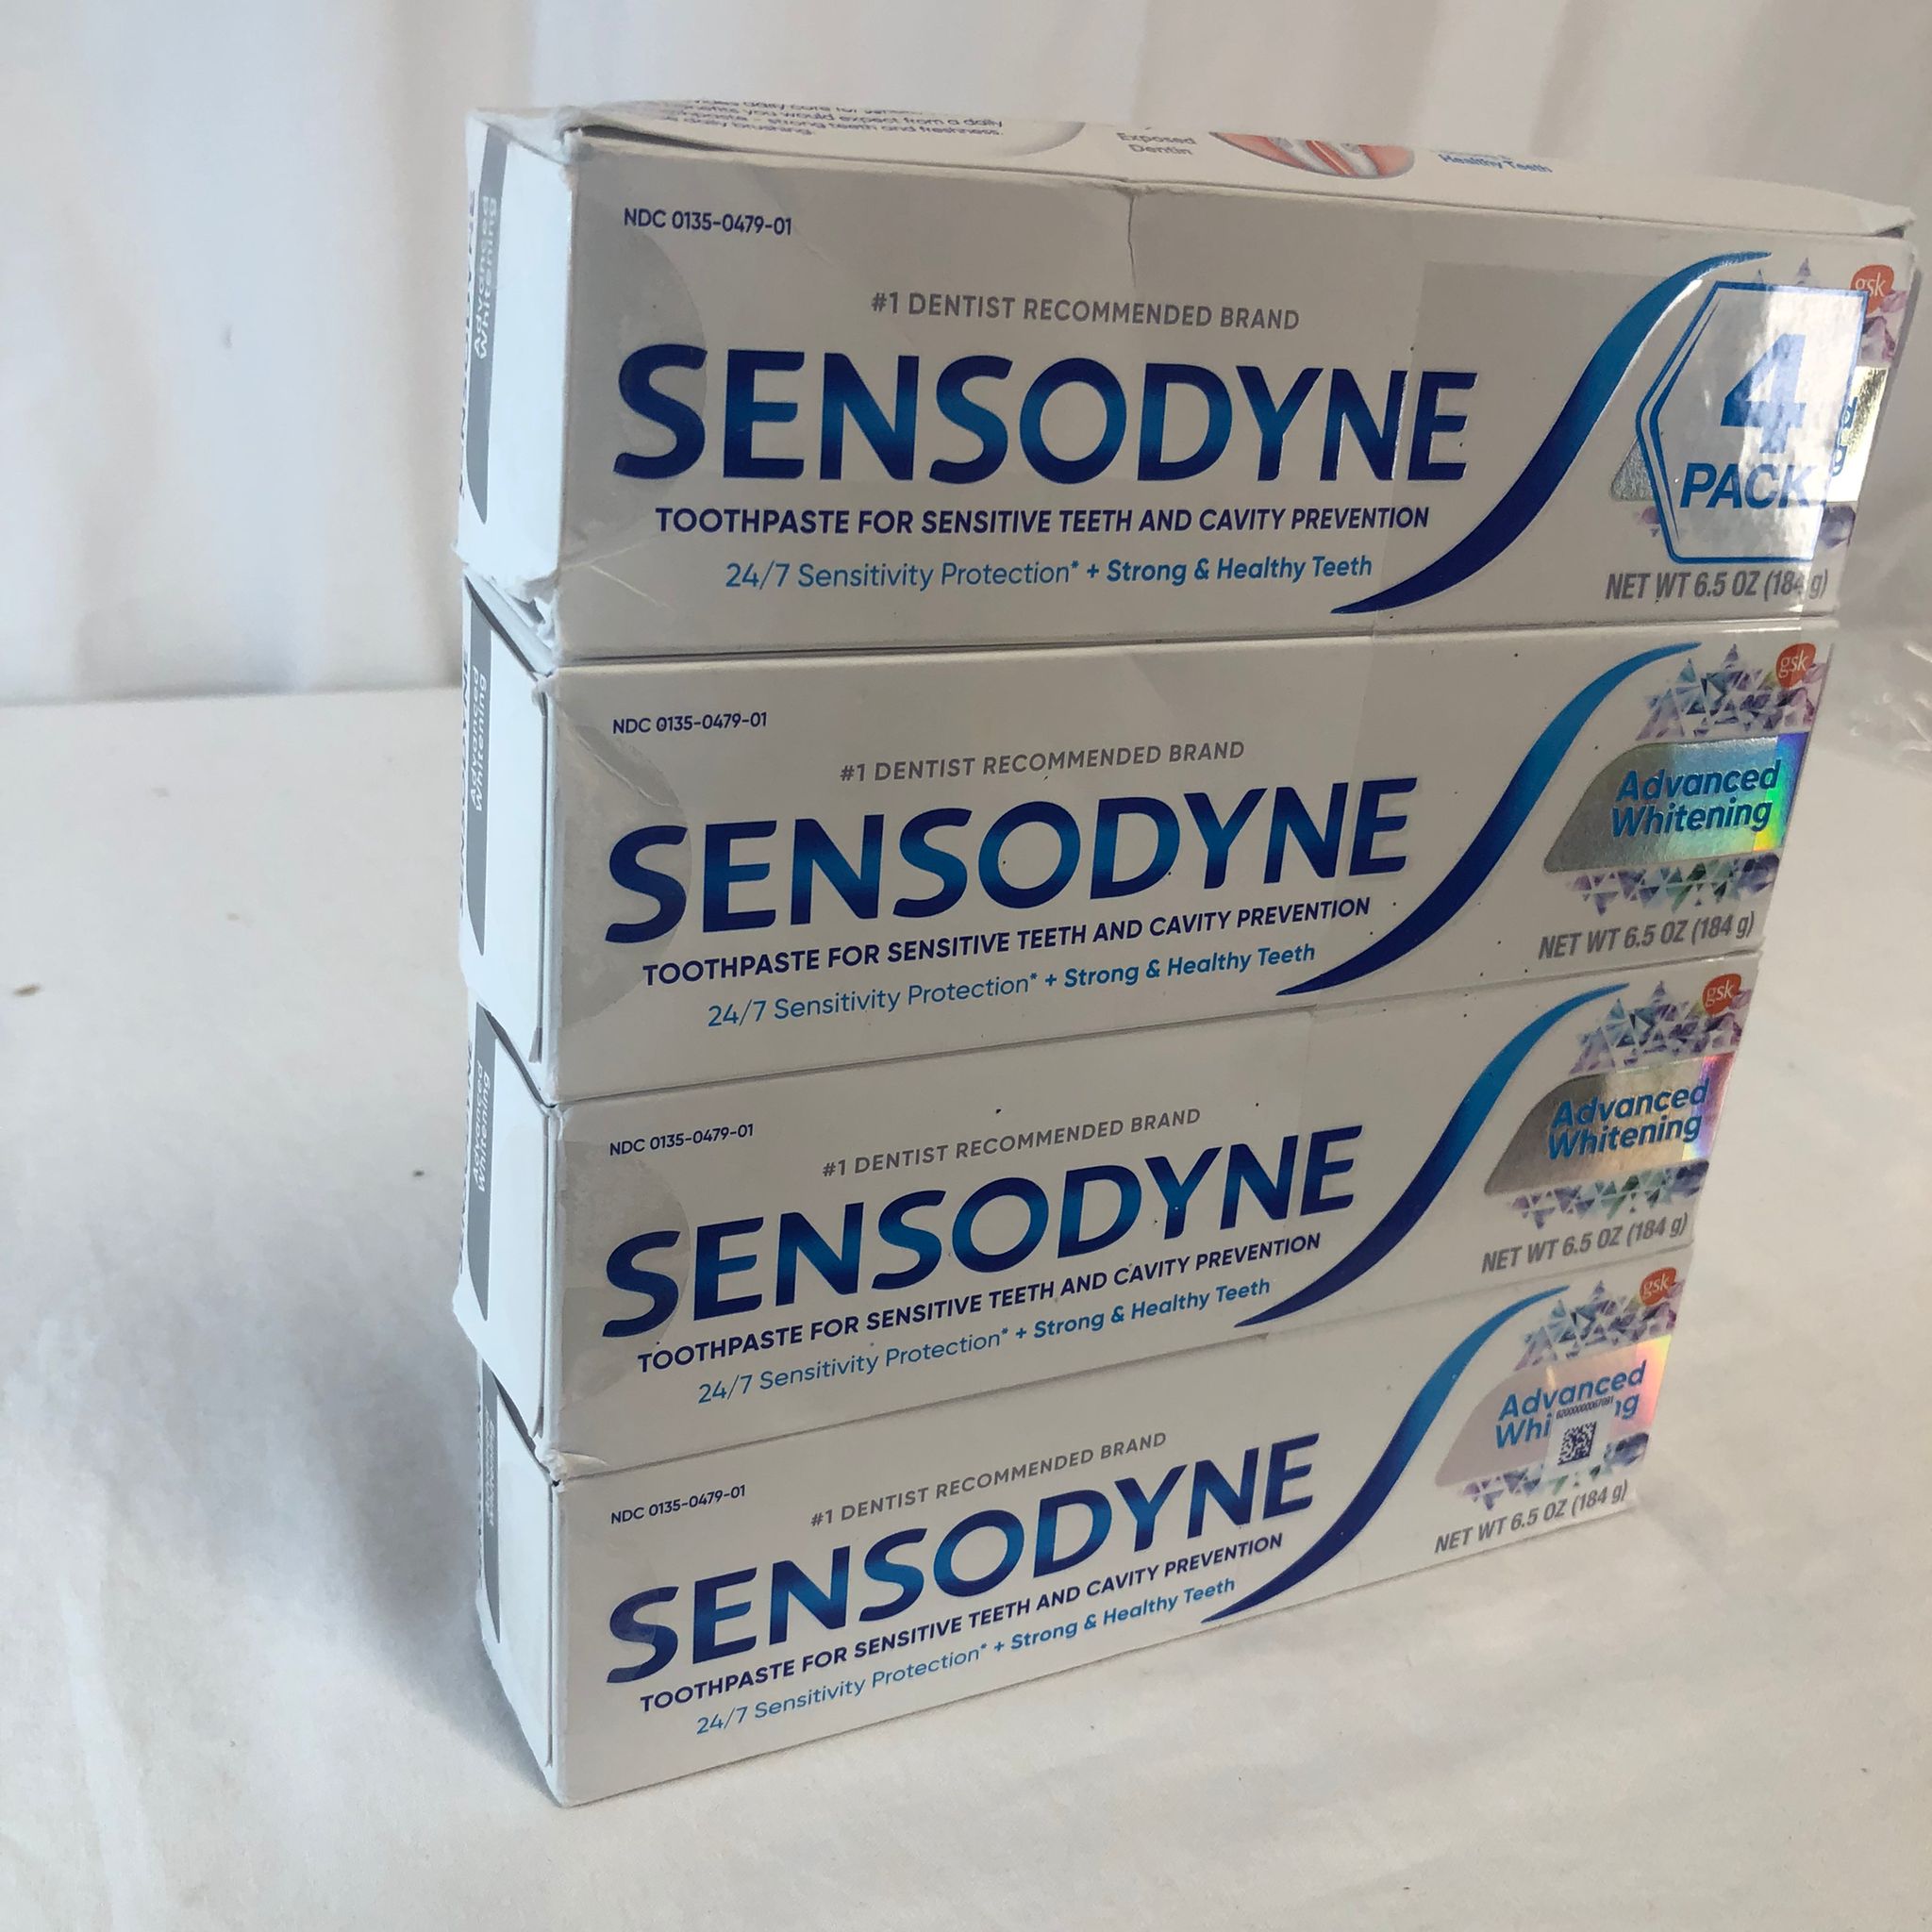 SENSODYNE Advanced Whitening Toothpaste, 6.5 oz, 4-pack